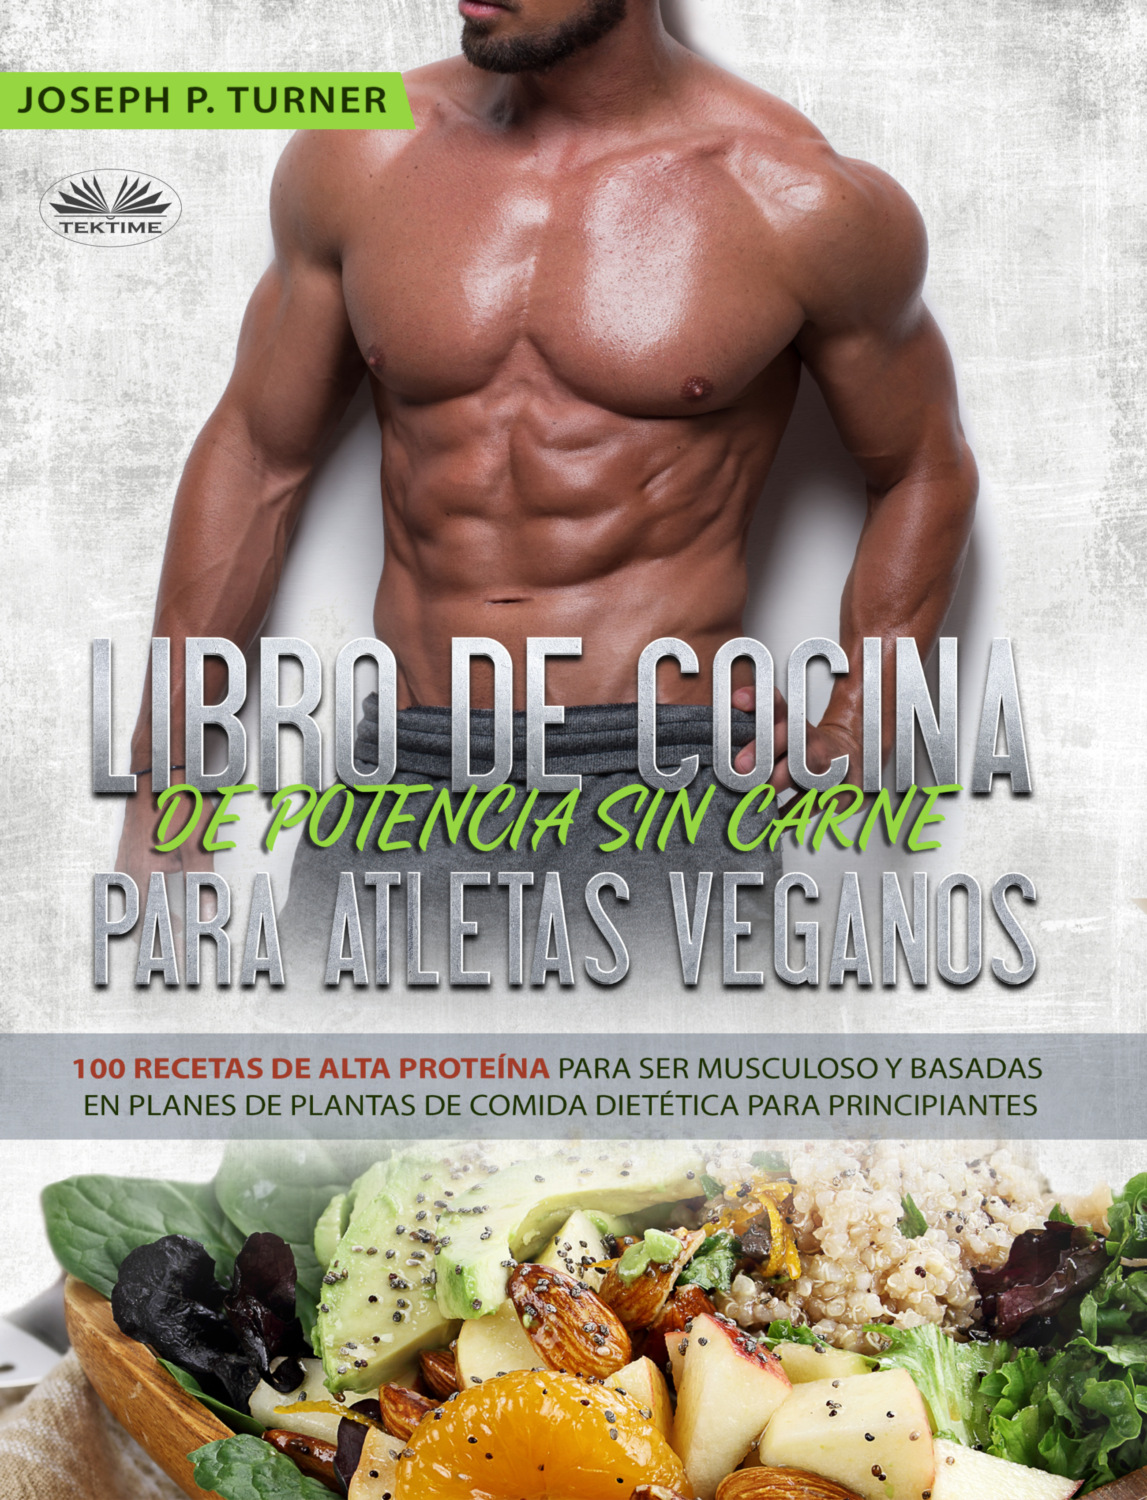 Libro De Cocina De Potencia Sin Carne Para Atletas Veganos, Joseph P.  Turner – скачать книгу fb2, epub, pdf на Литрес